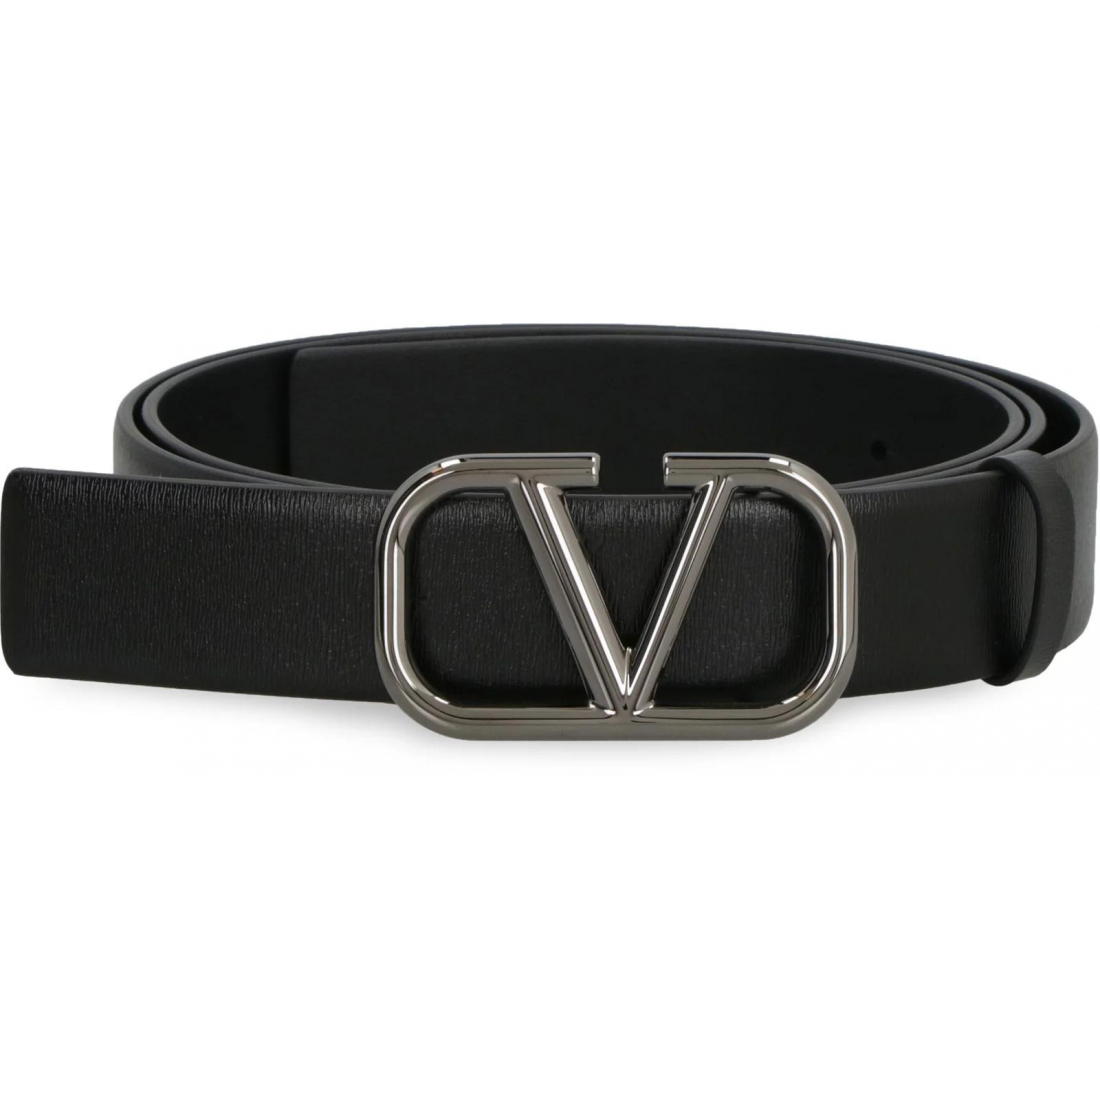 Men's 'VLogo Signature' Belt